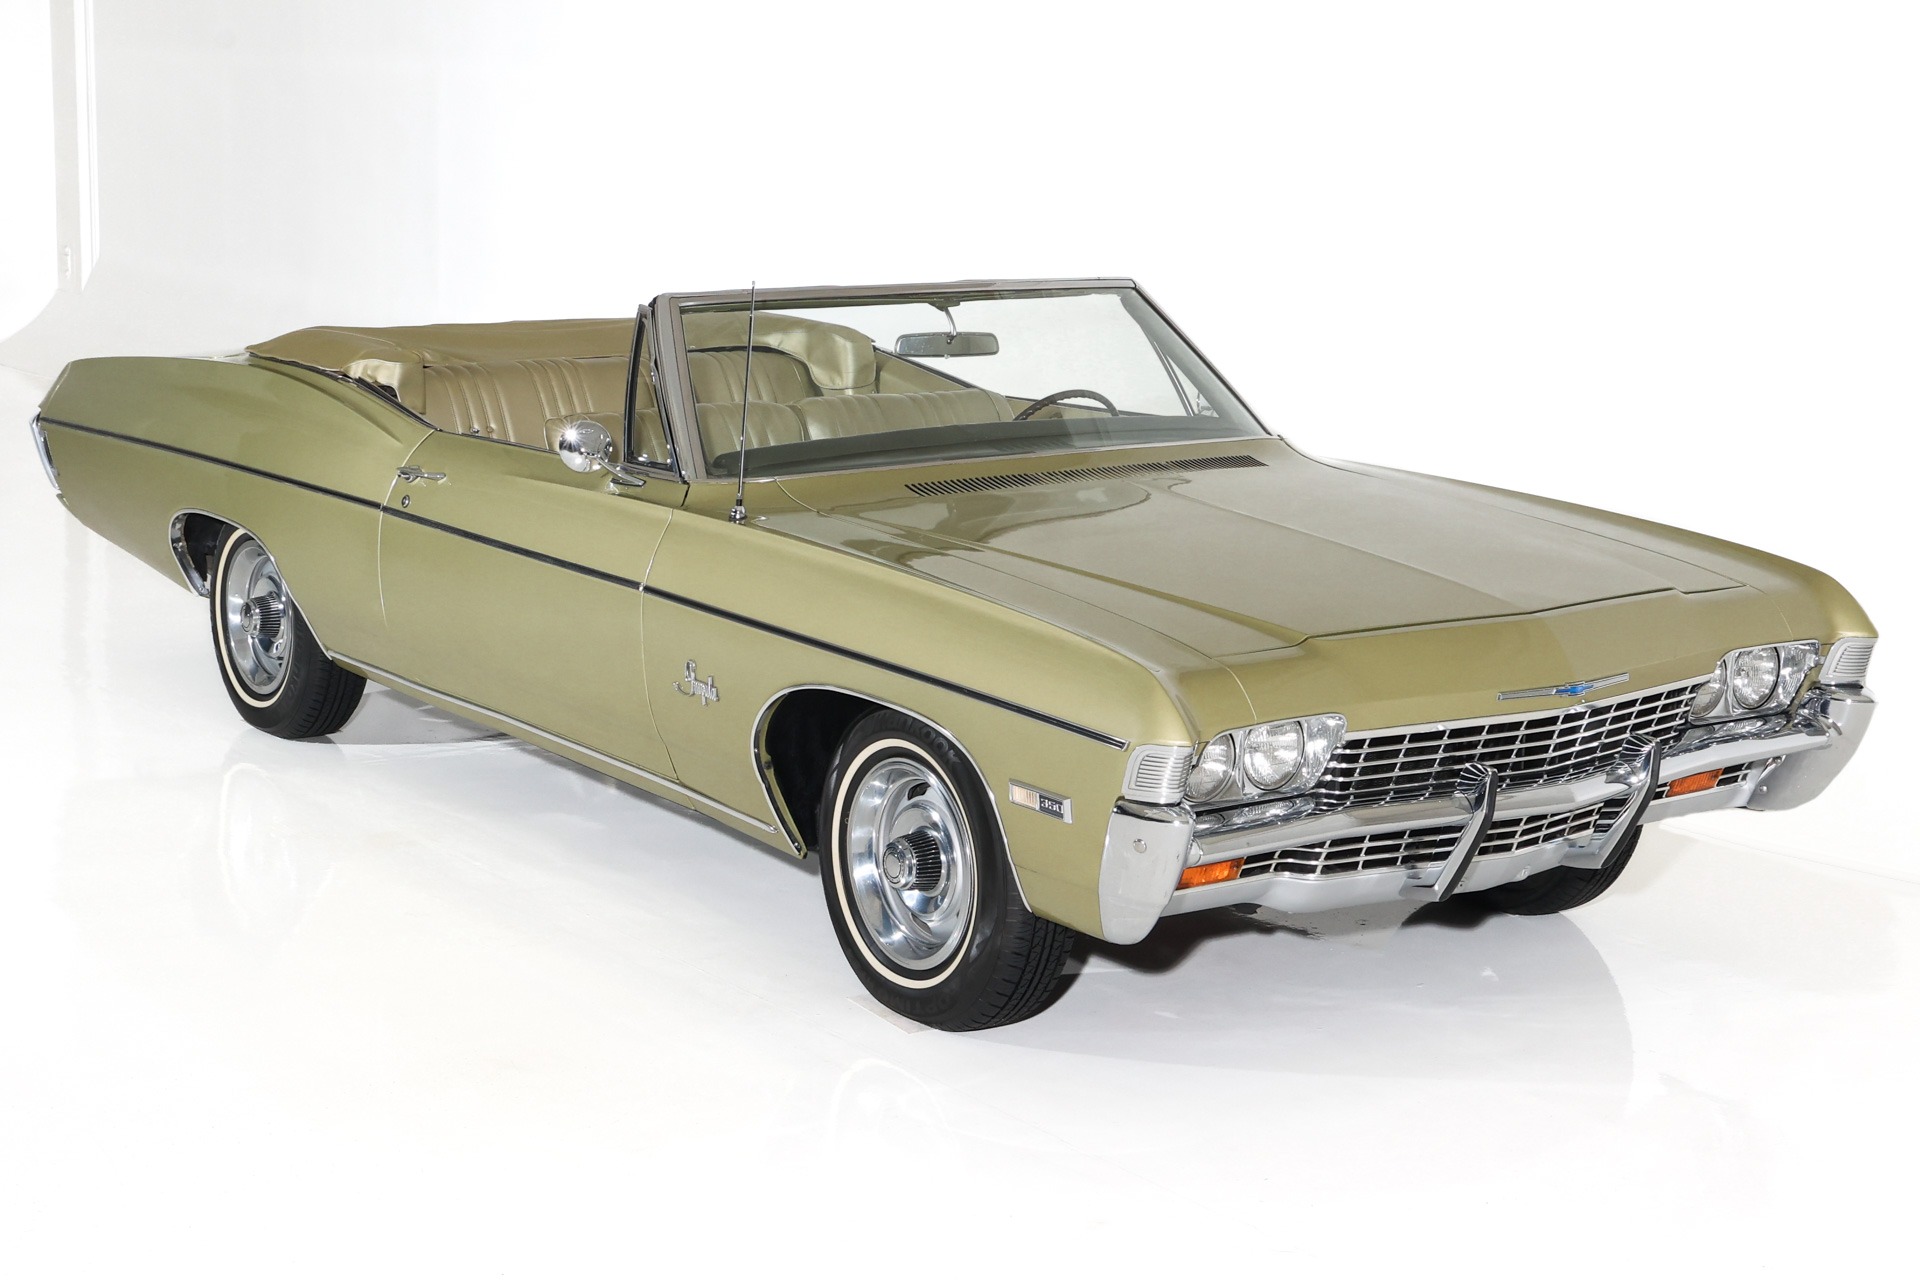 For Sale Used 1968 Chevrolet Impala Convertible, 350ci Auto PS PB | American Dream Machines Des Moines IA 50309